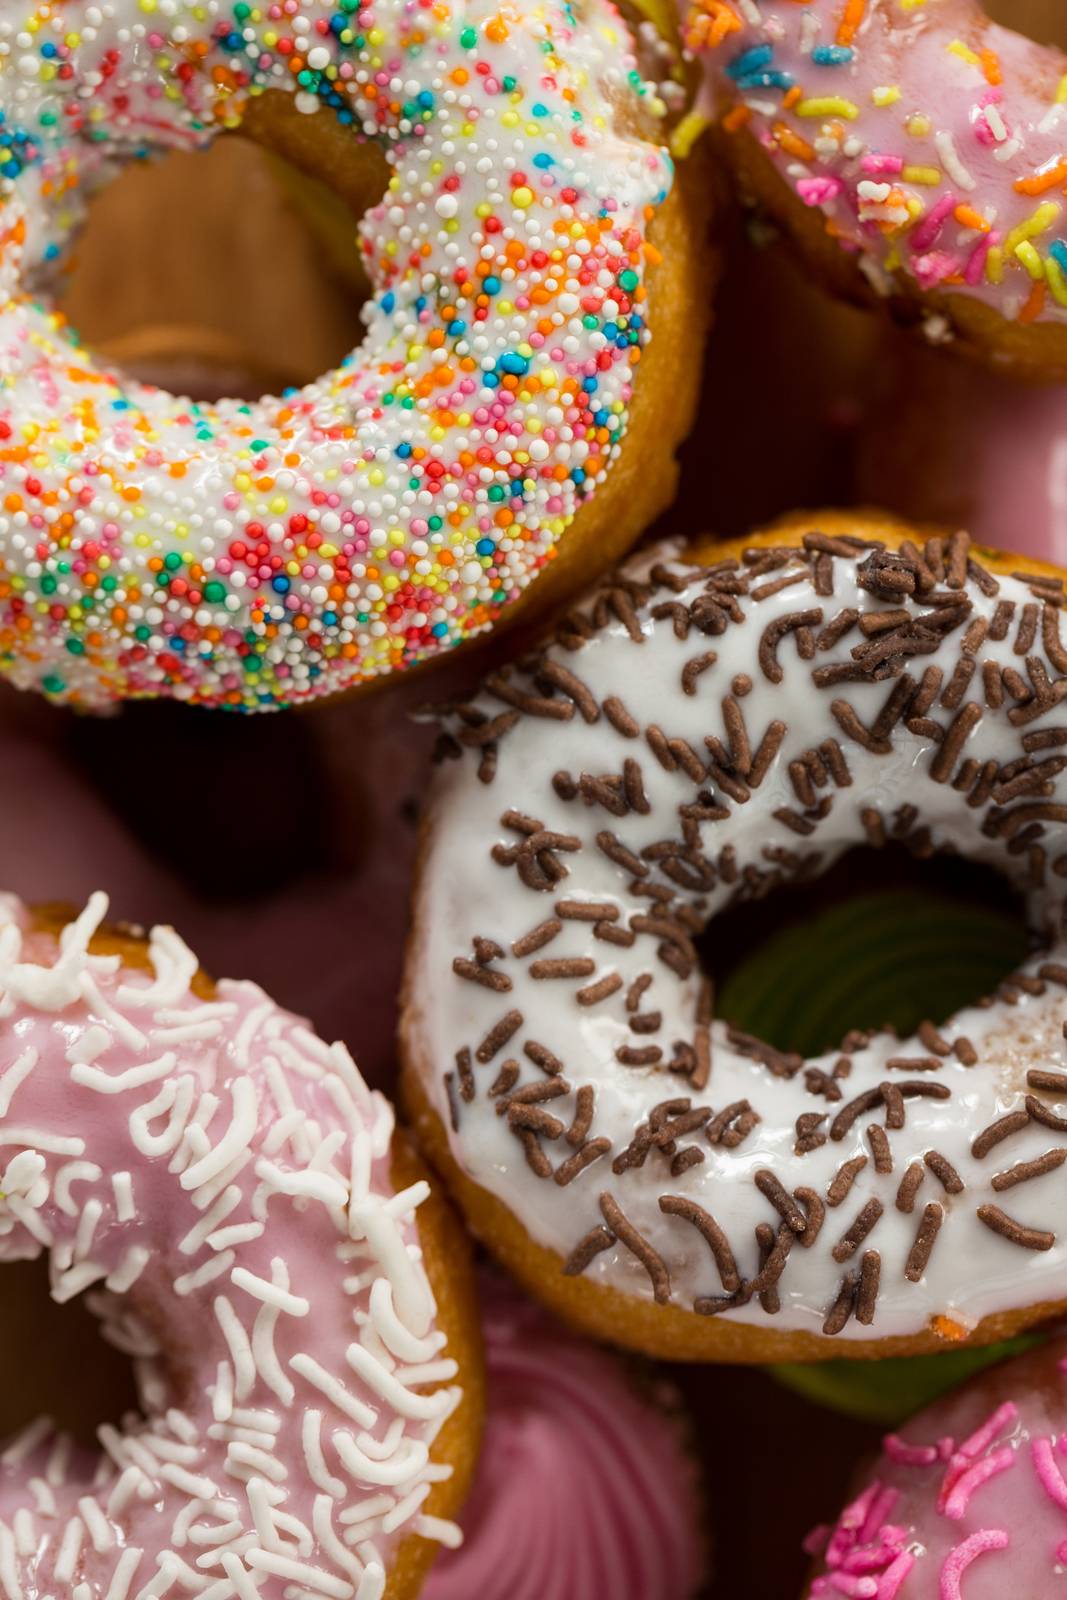 Leckere Donuts mit Streuseln - Lizenzfreies Foto - #D29268808 ...